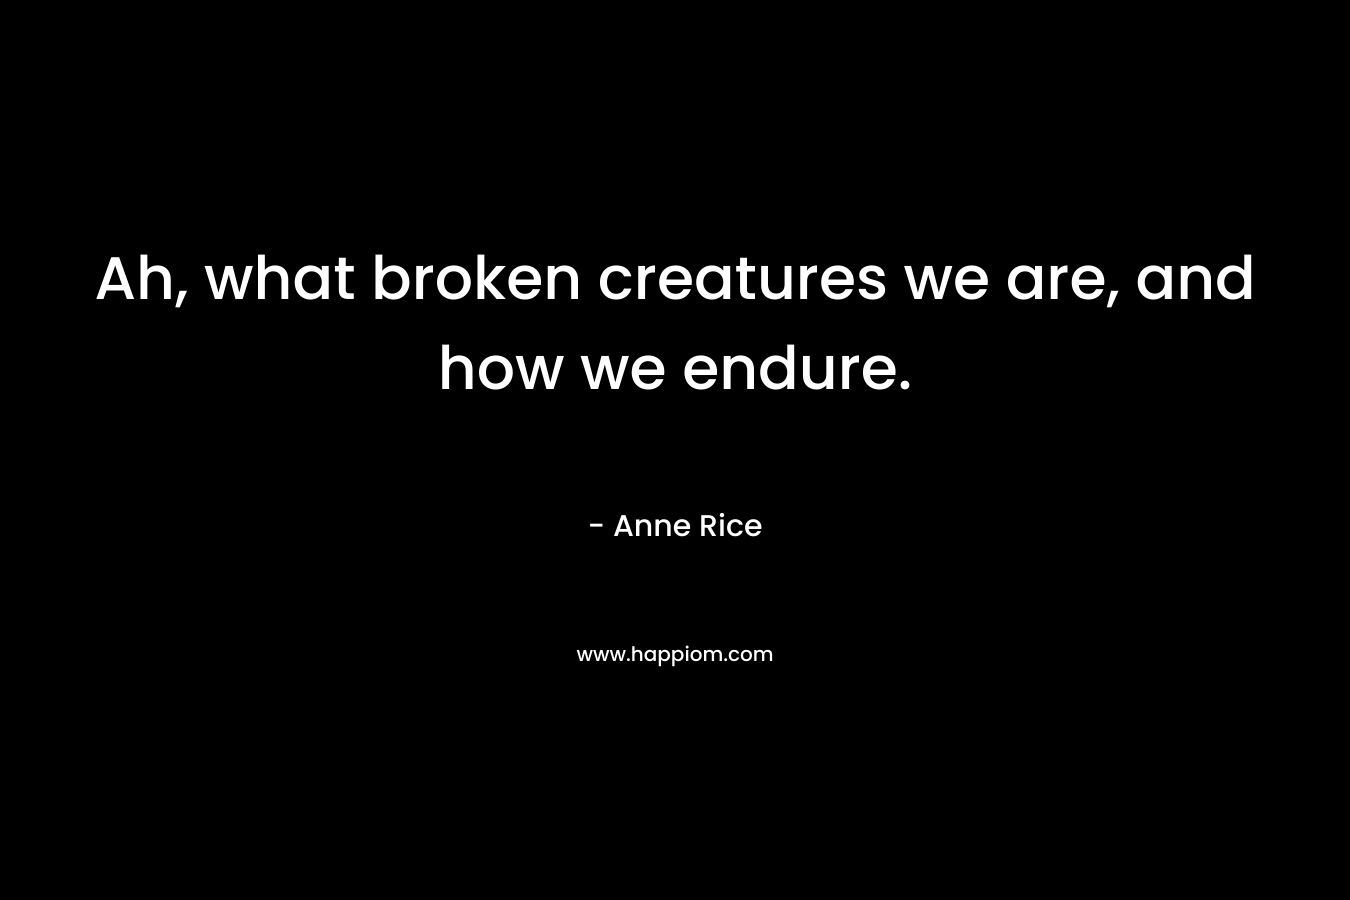 Ah, what broken creatures we are, and how we endure.